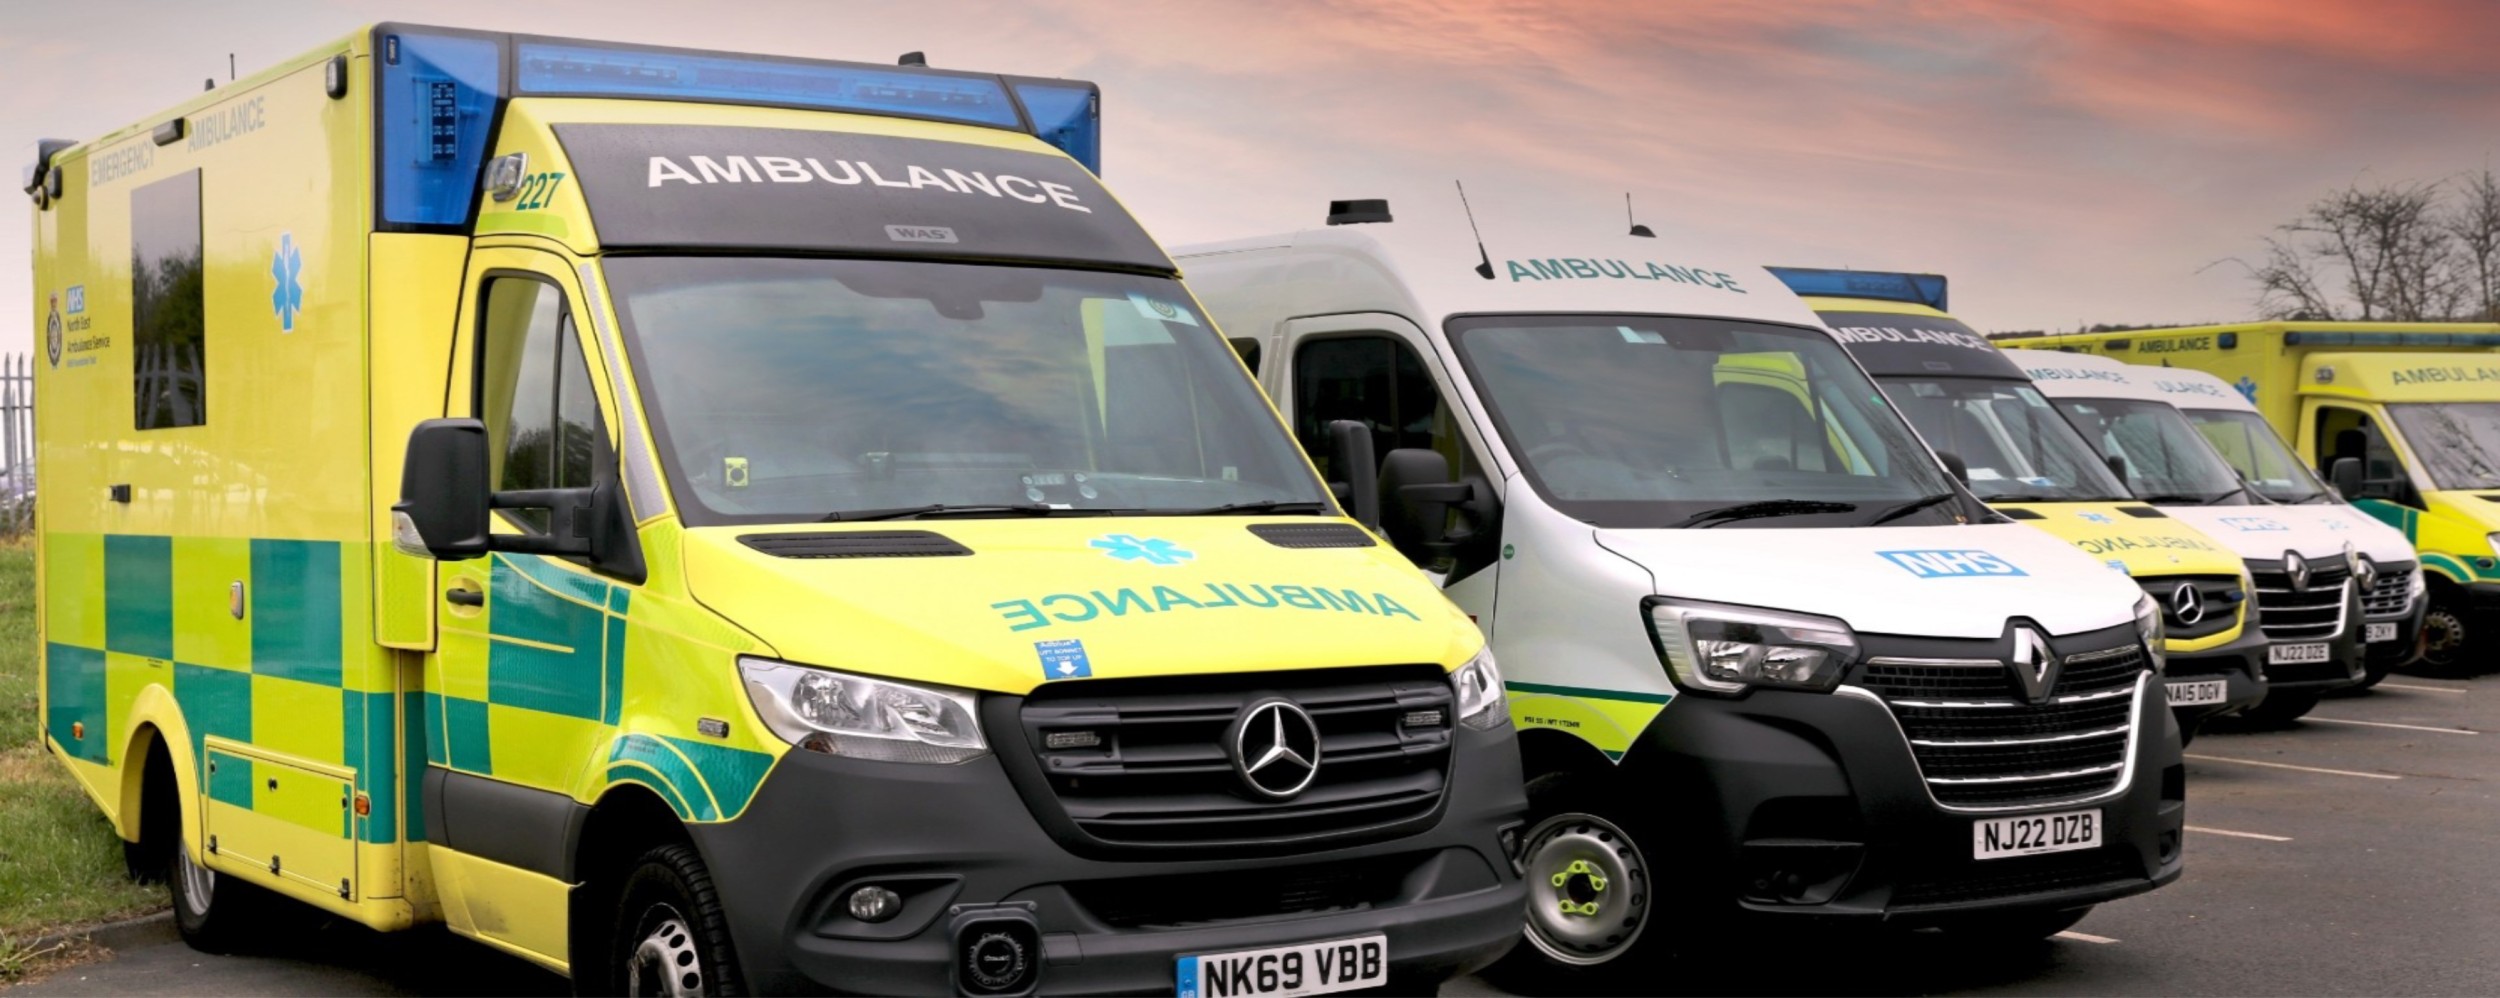 Ambulance and PTS Vehicles